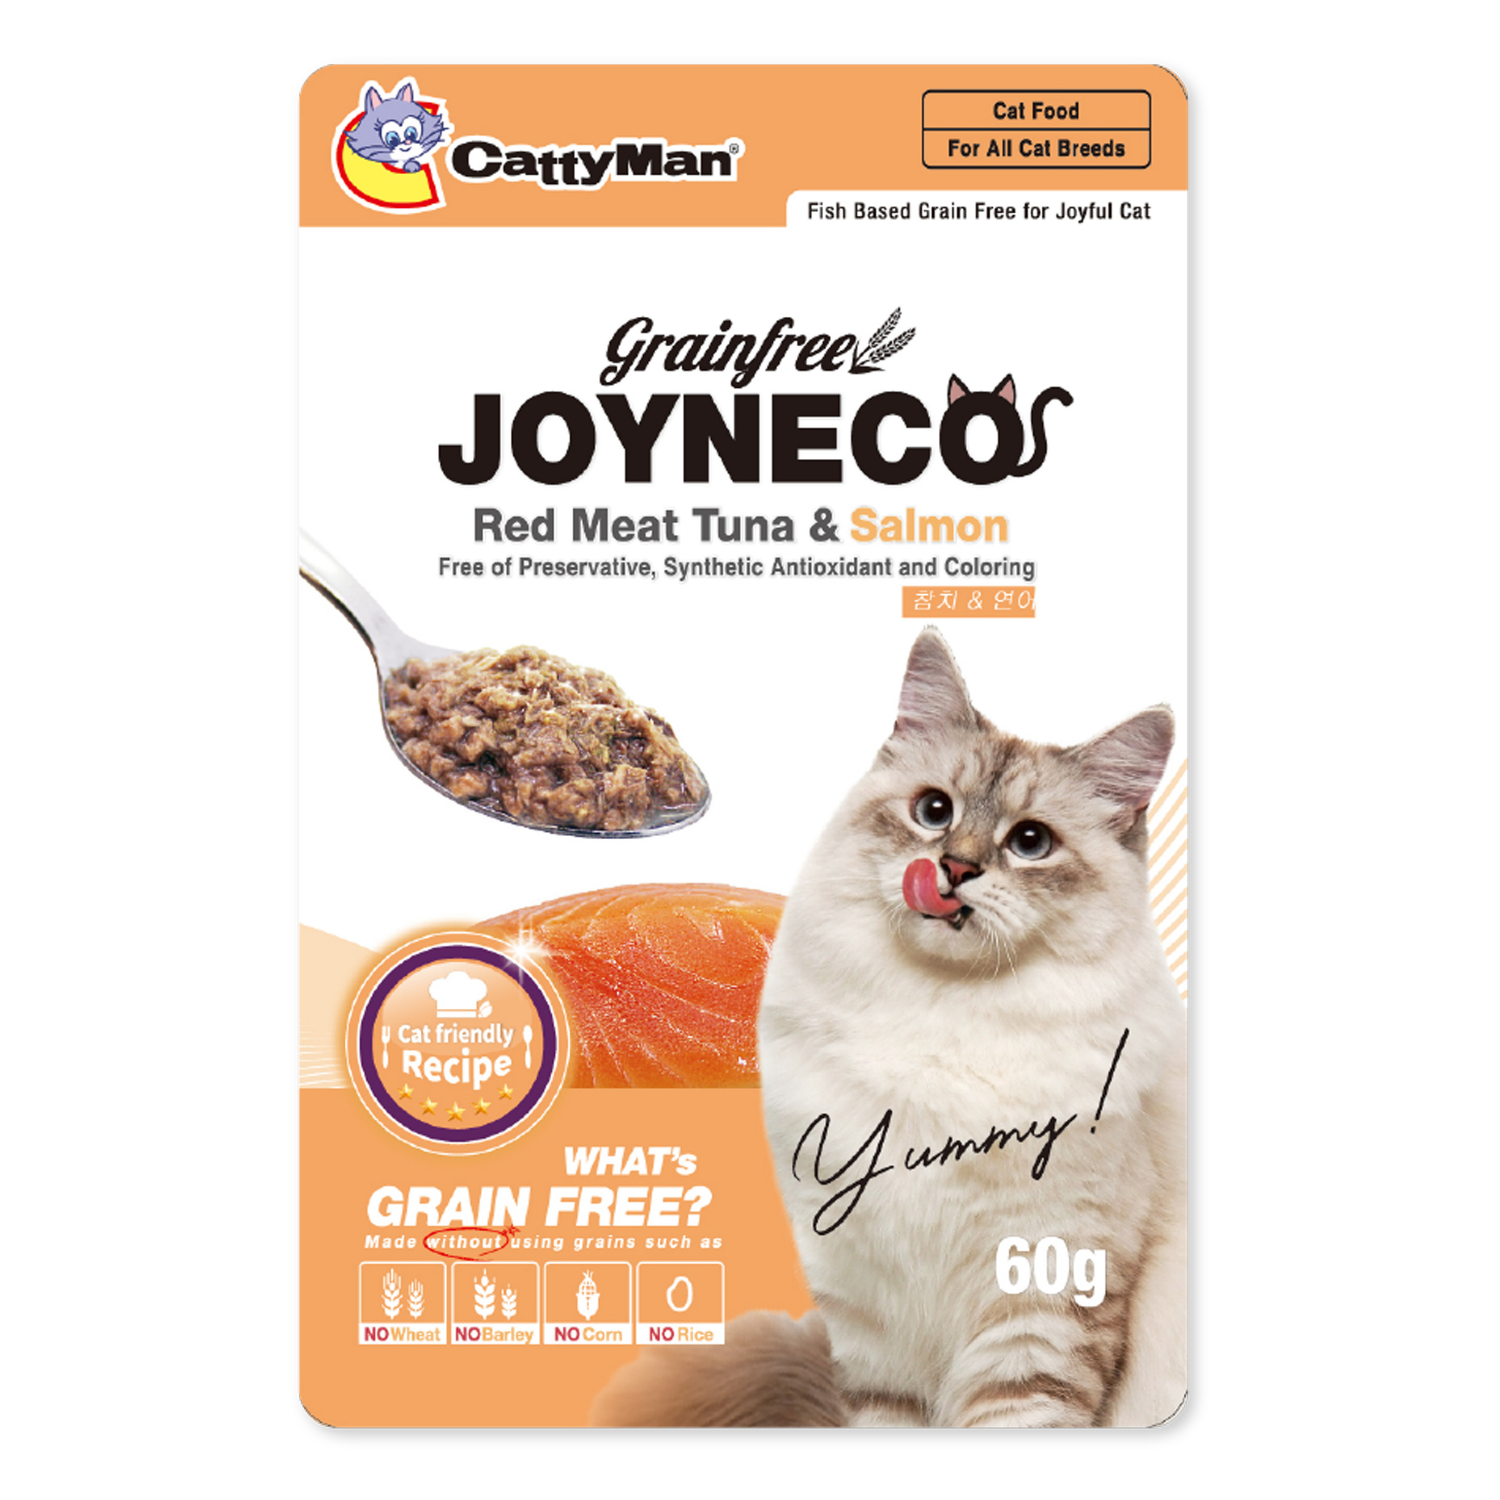 [DISCONTINUED] CattyMan Grain Free Joyneco (Red Meat Tuna & Salmon) Pouch - 60g